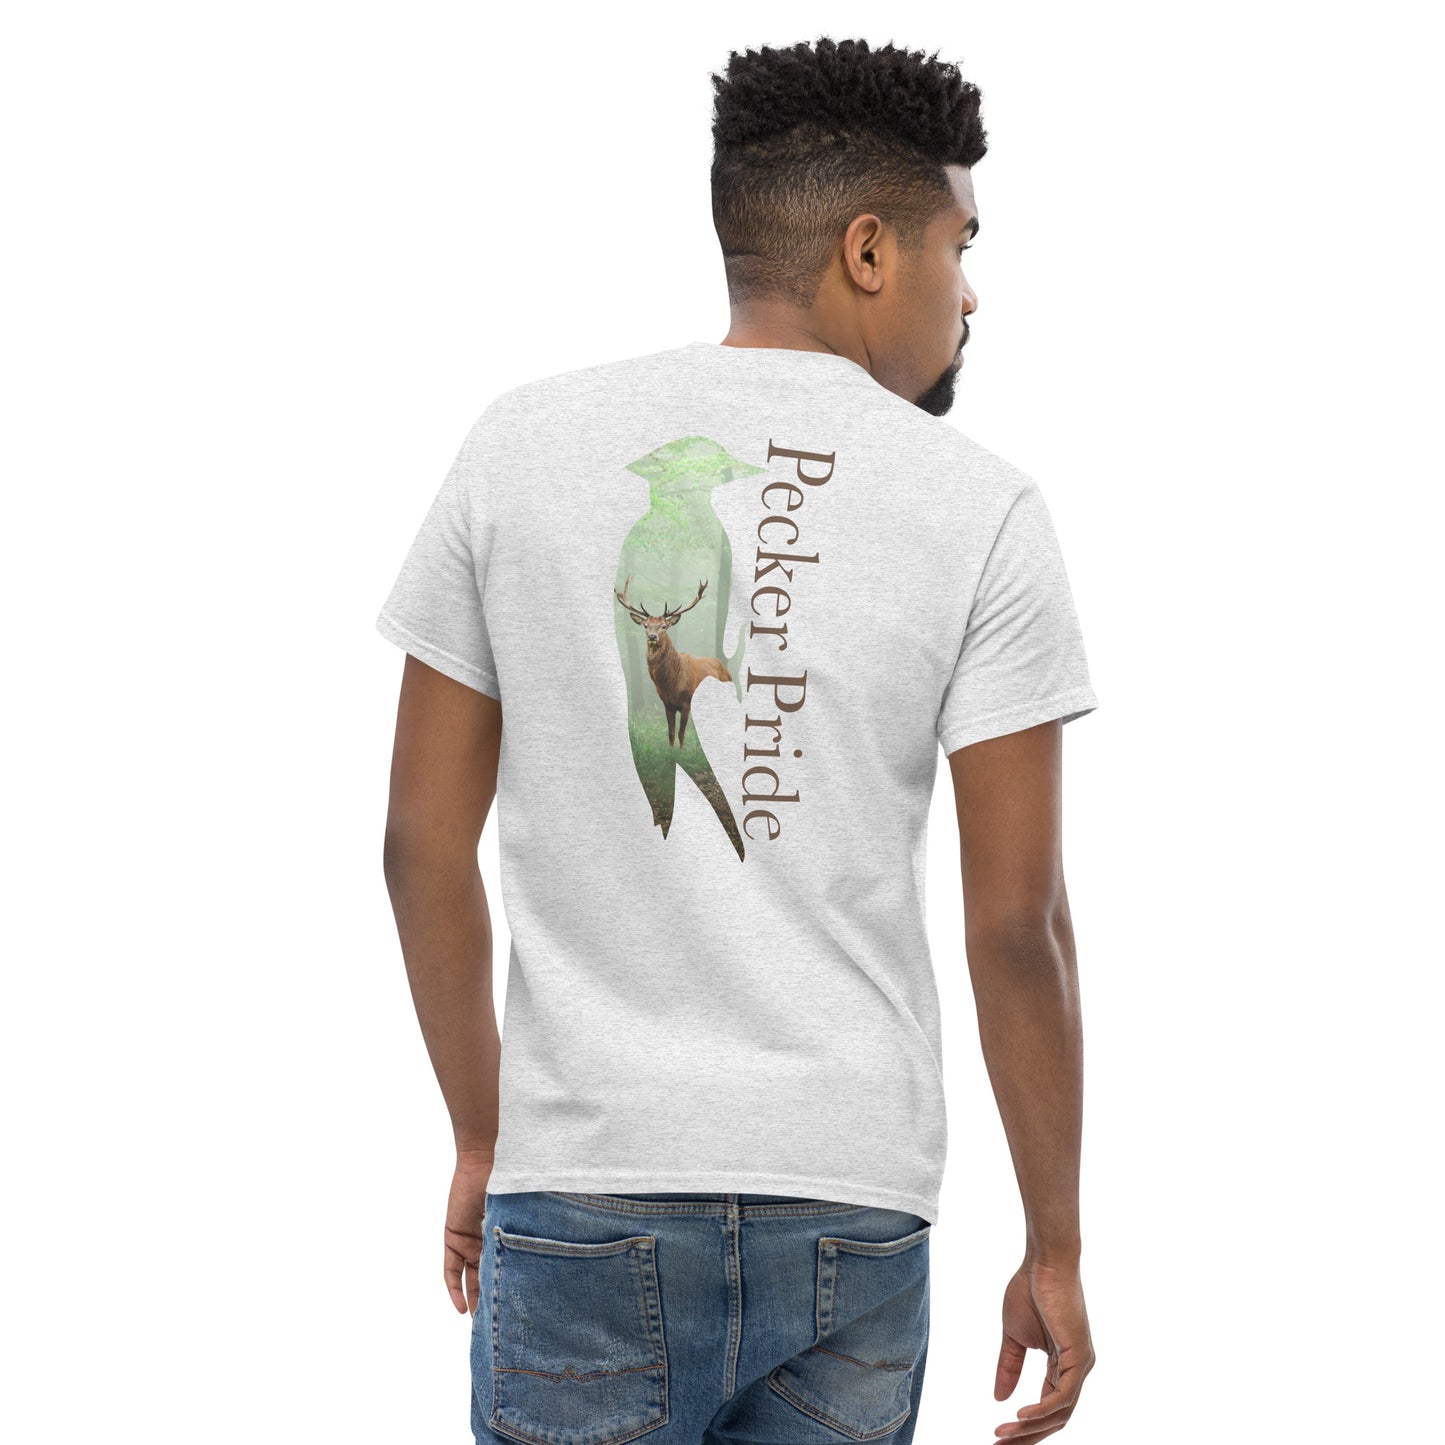 Deer Pecker Pride Rugged Wear T-Shirt